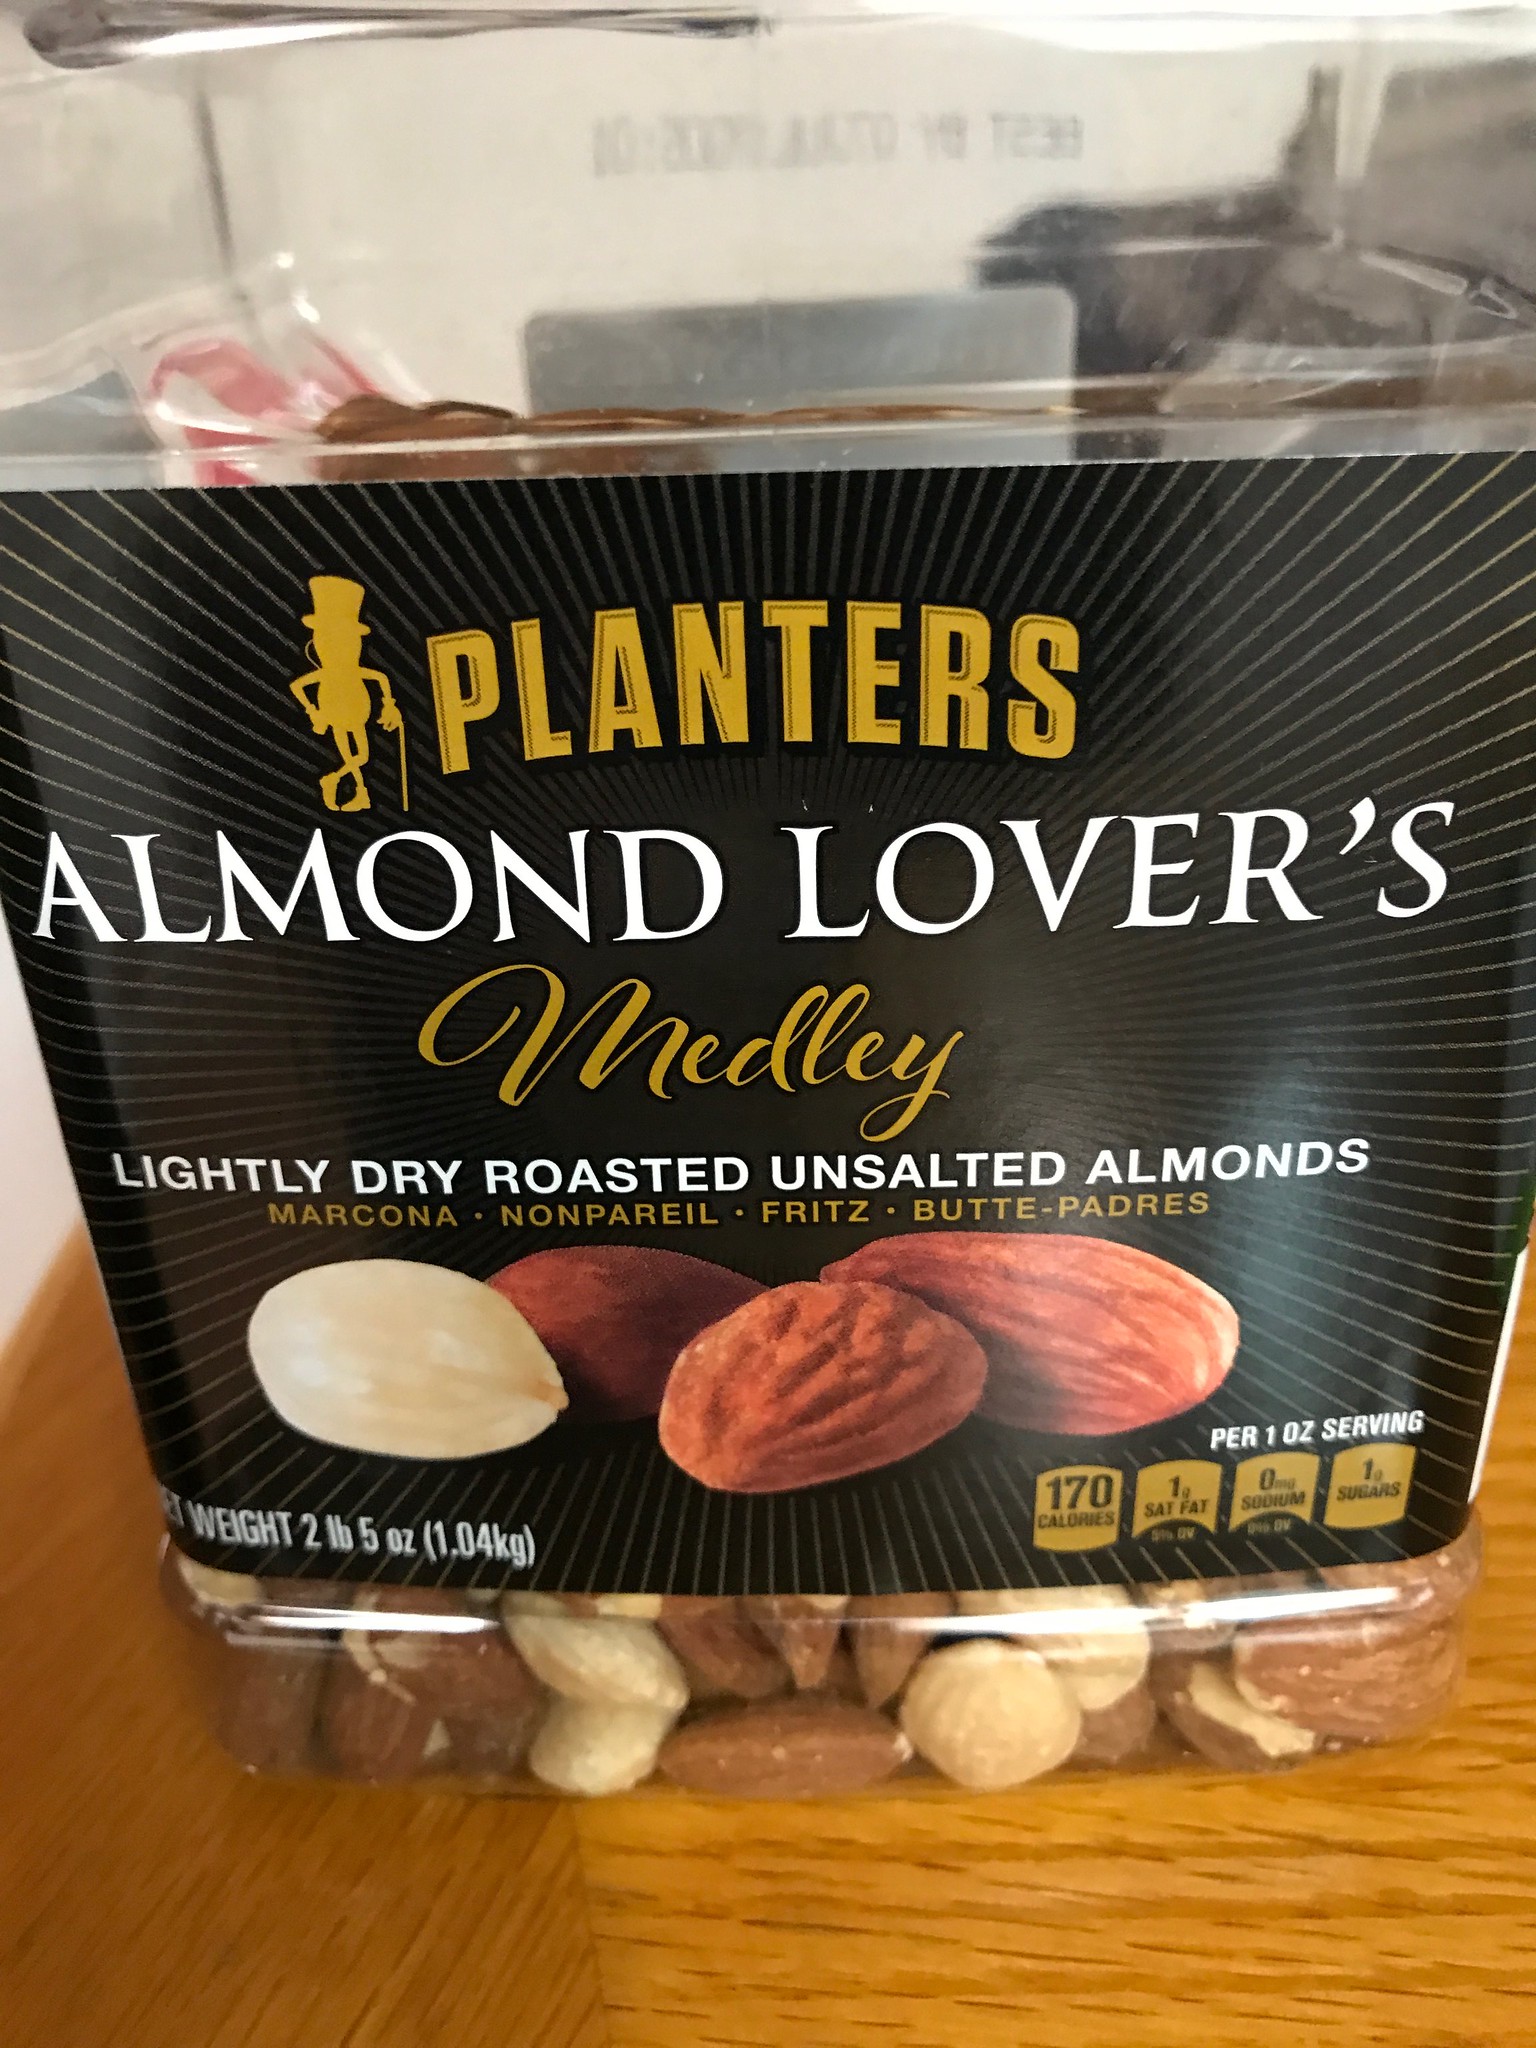 Almond lover